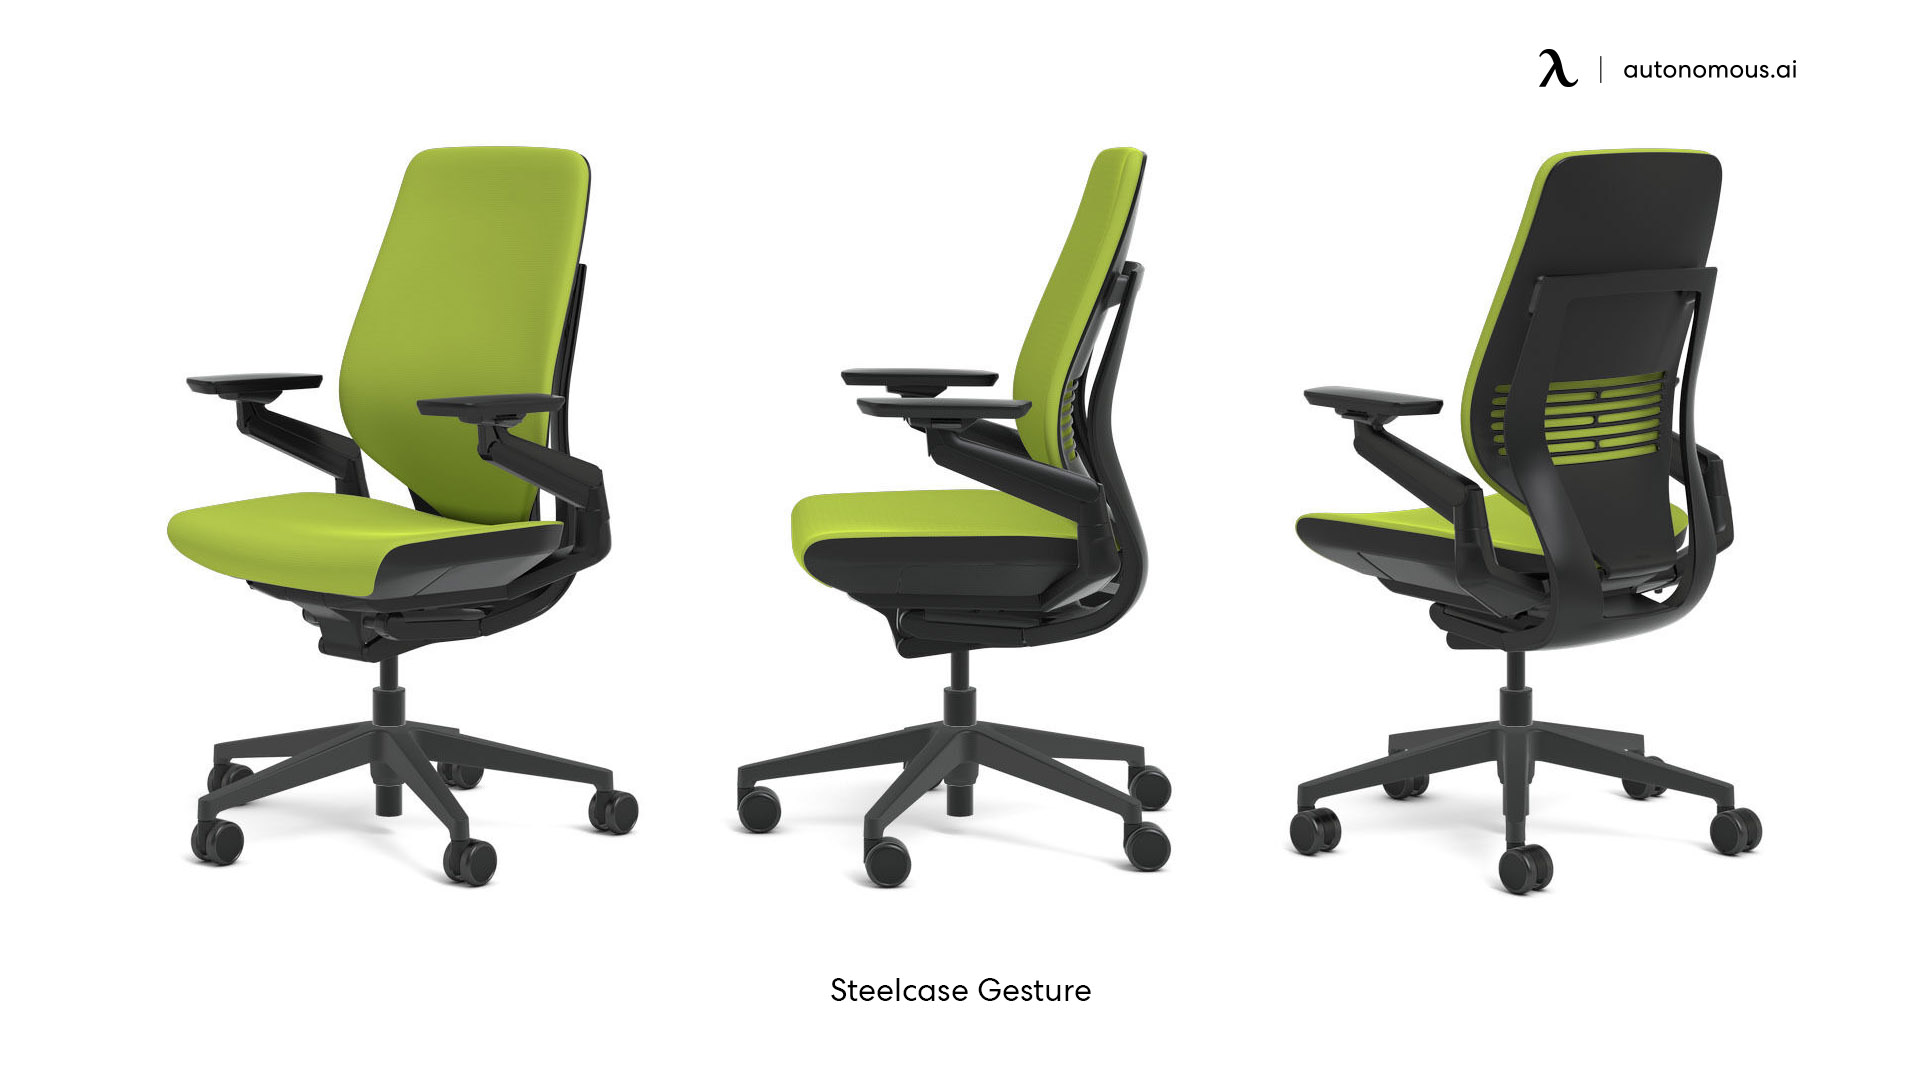 Steelcase Gesture green office chair